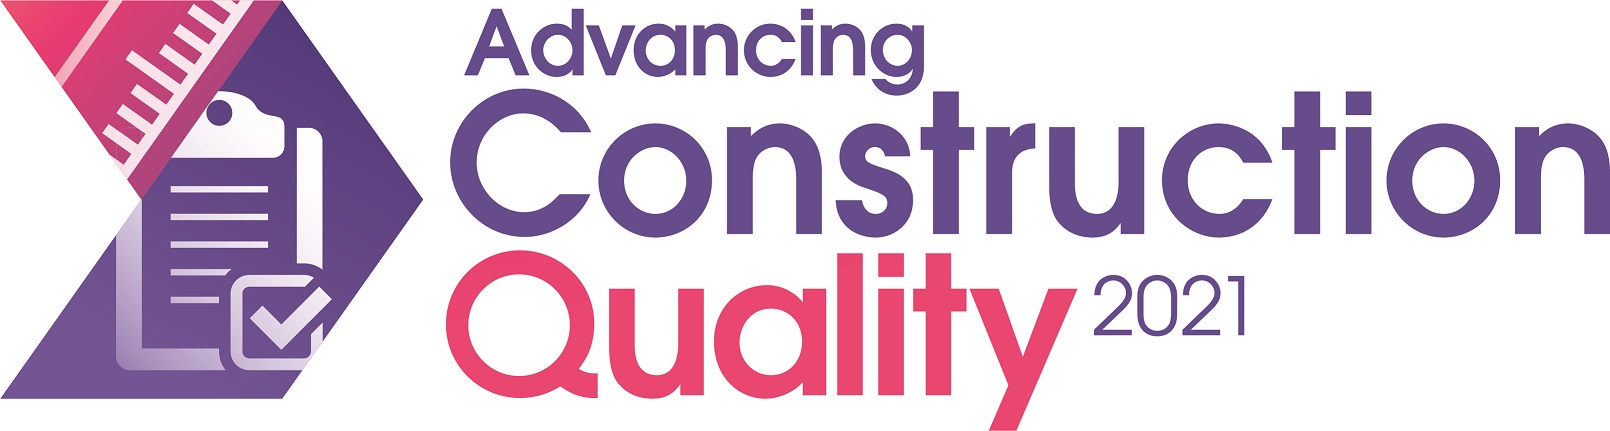 Advancing Construction Quality 2021 logo